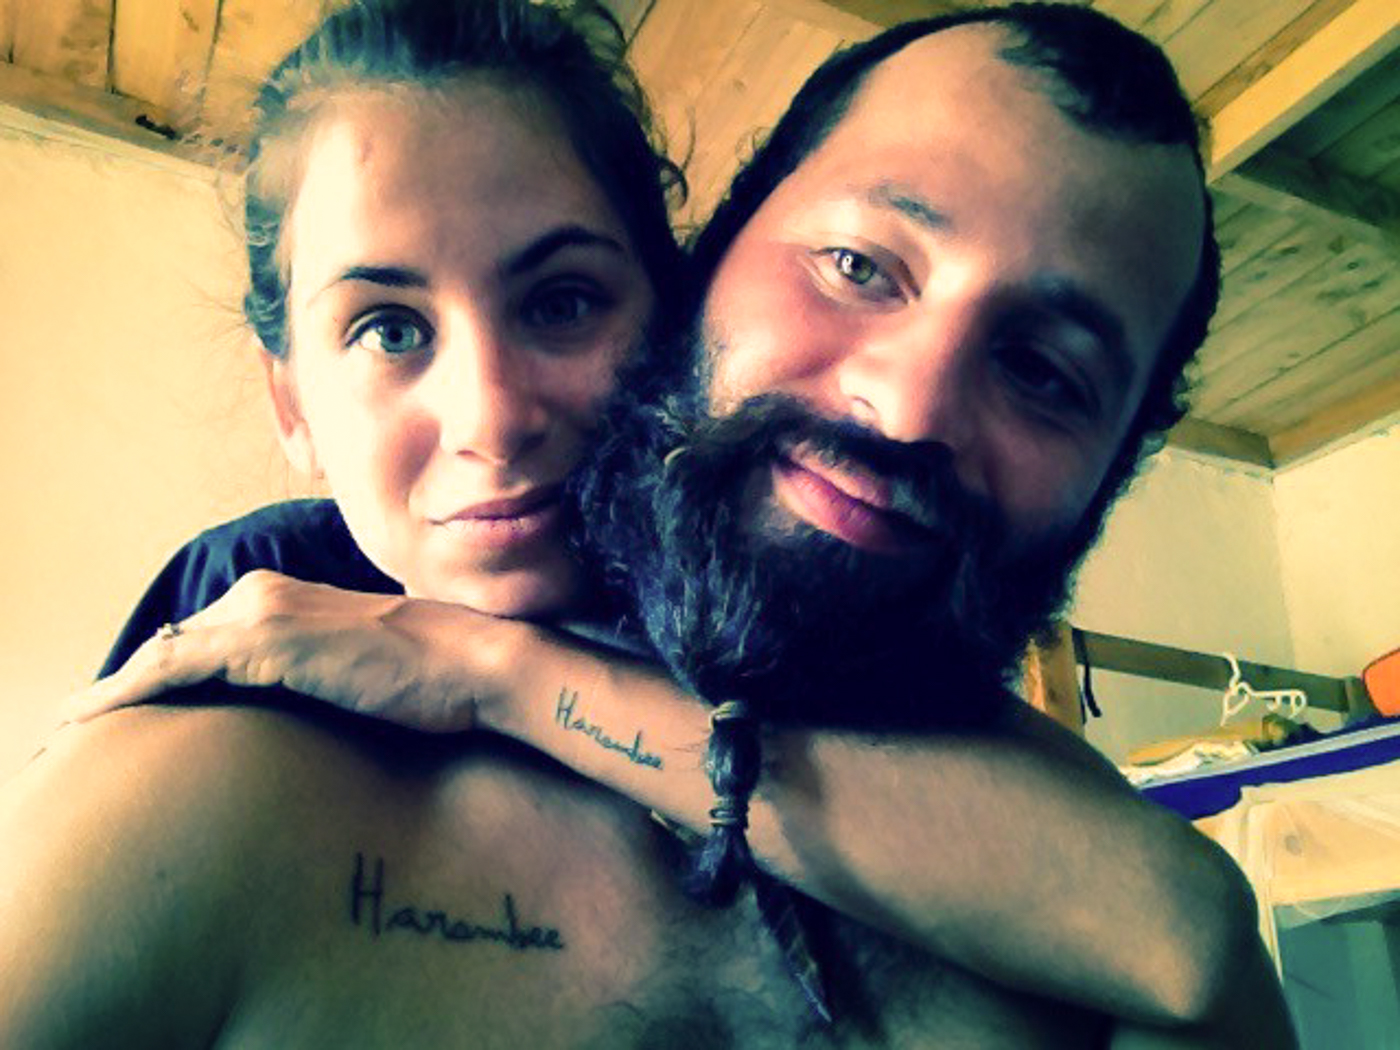 Tiago and Fernanda with the Harambee tattoo